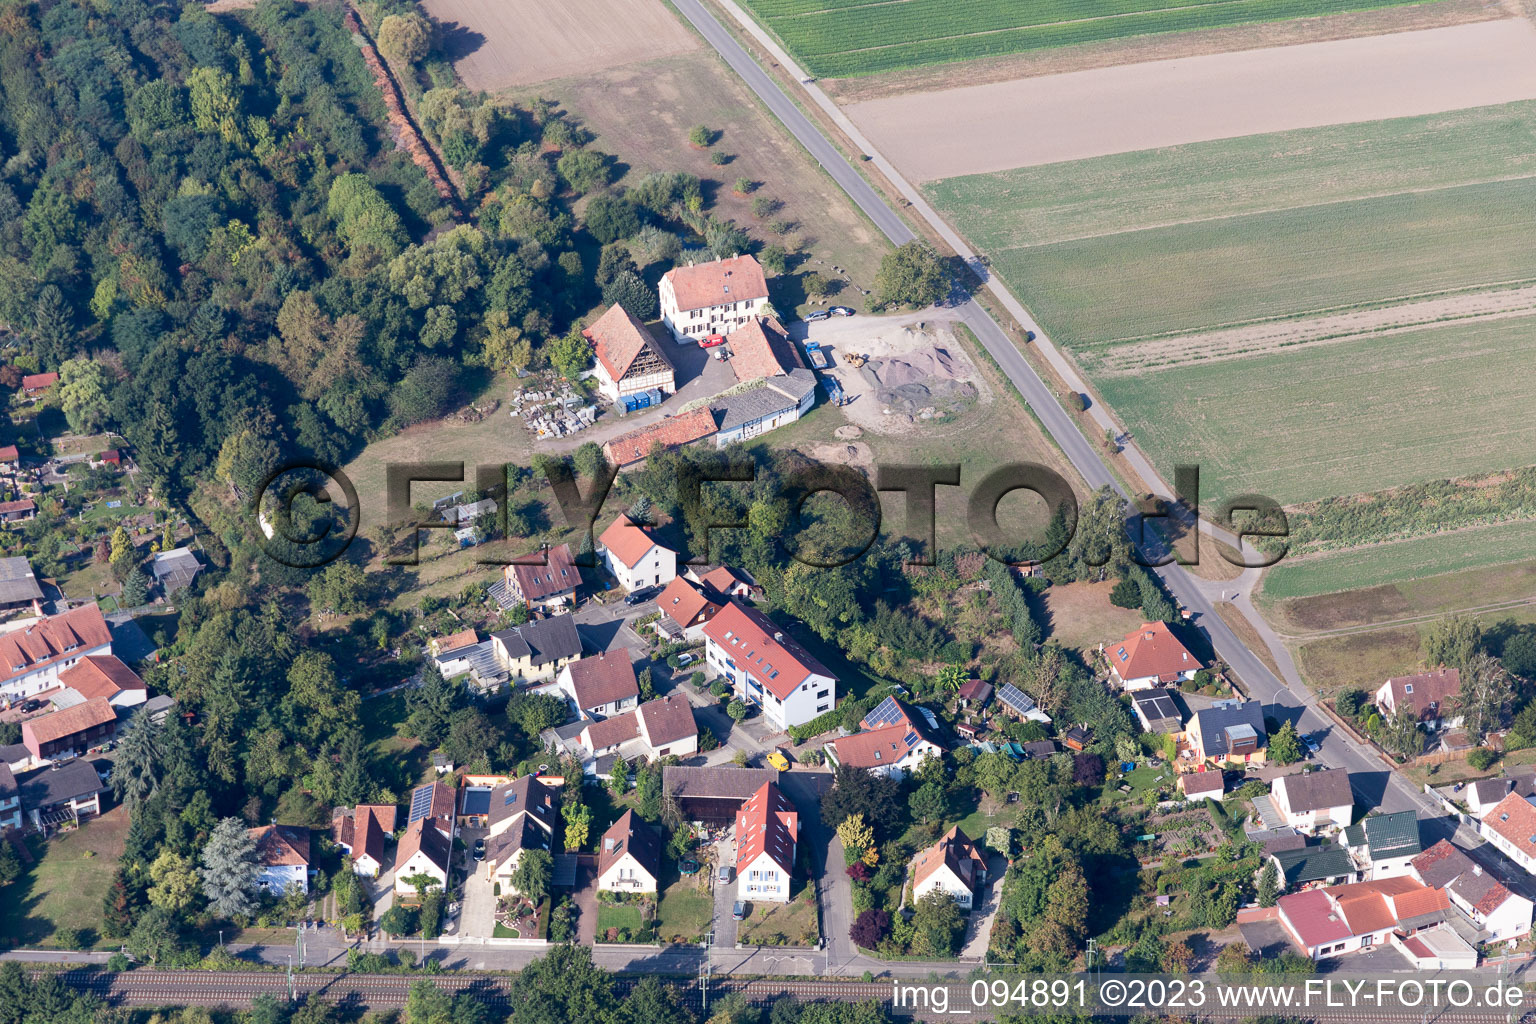 Drone image of Rheinzabern in the state Rhineland-Palatinate, Germany